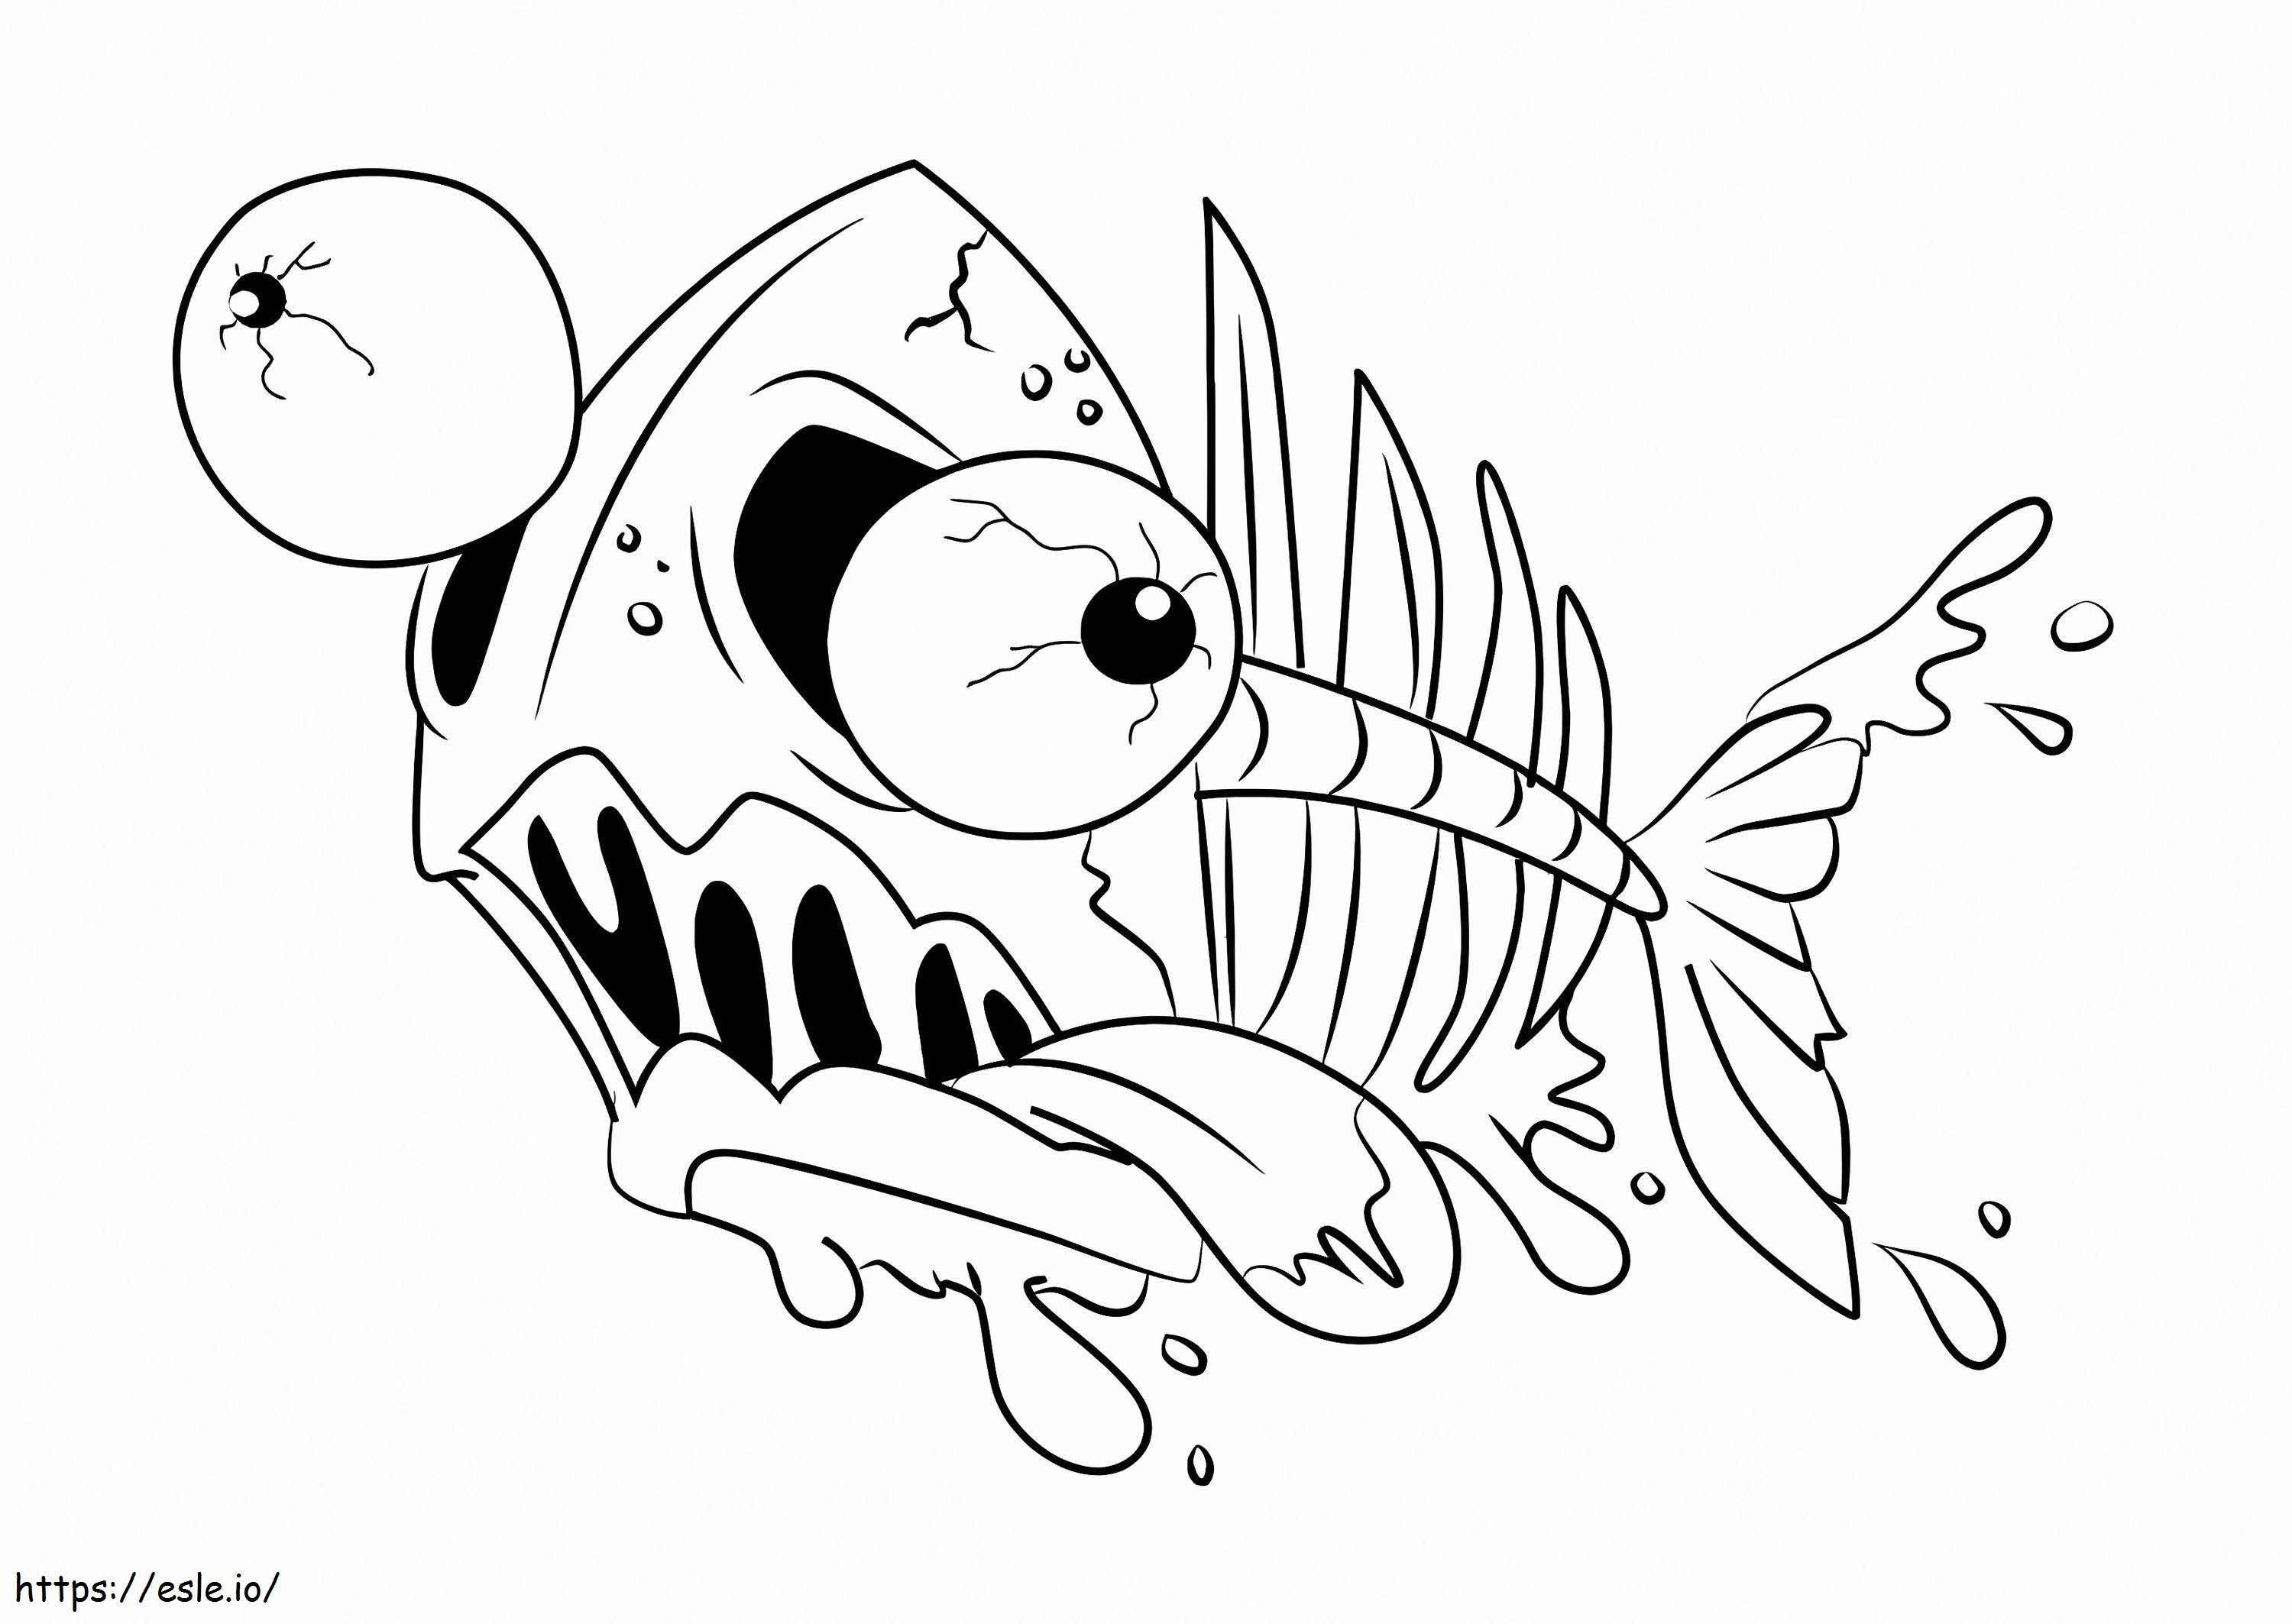 Filleted Fish Ugglys Pet Shop coloring page